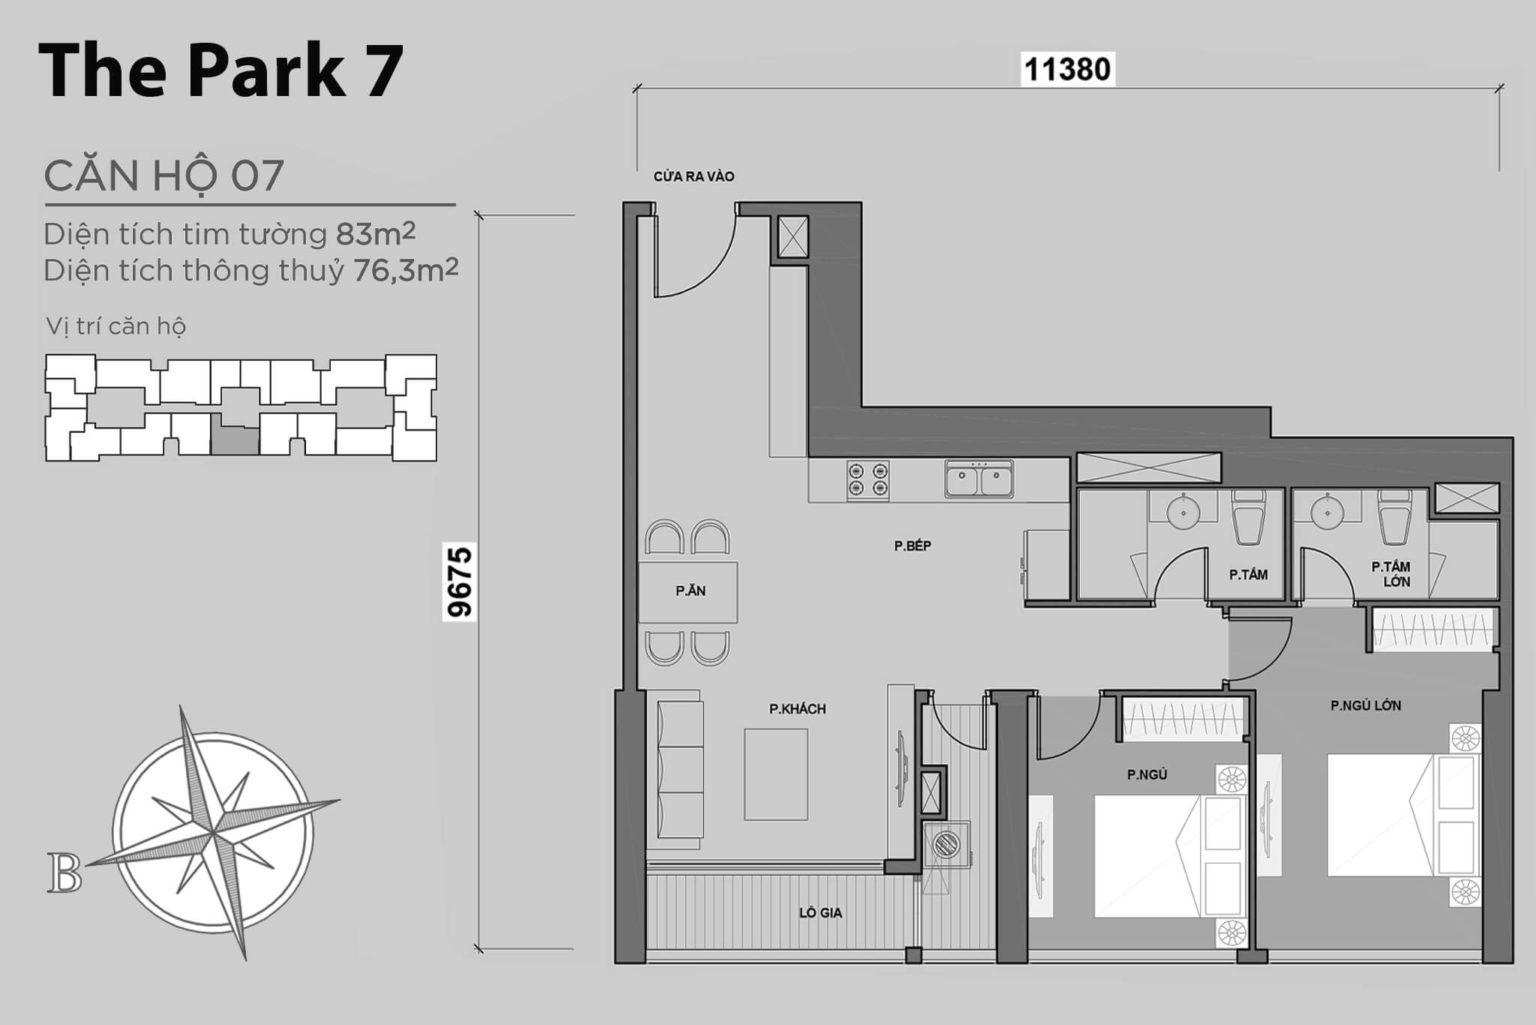 202301/02/10/071331-mat-bang-layout-park-7-p7-07-1536x1025.jpg